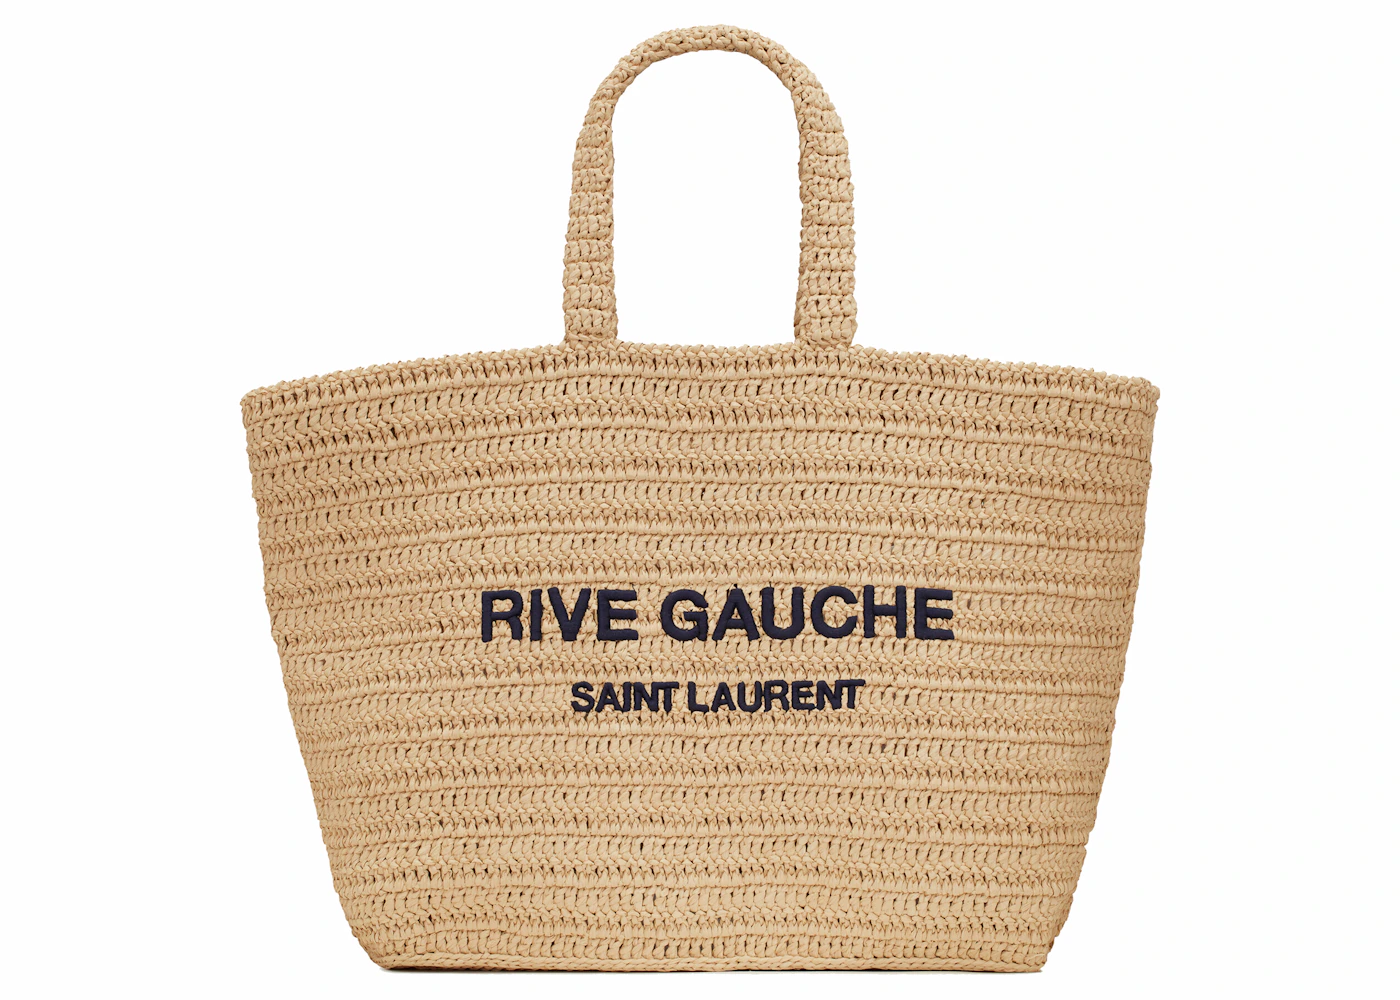 Saint Laurent Rive Gauche Straw Tote Bag in Black